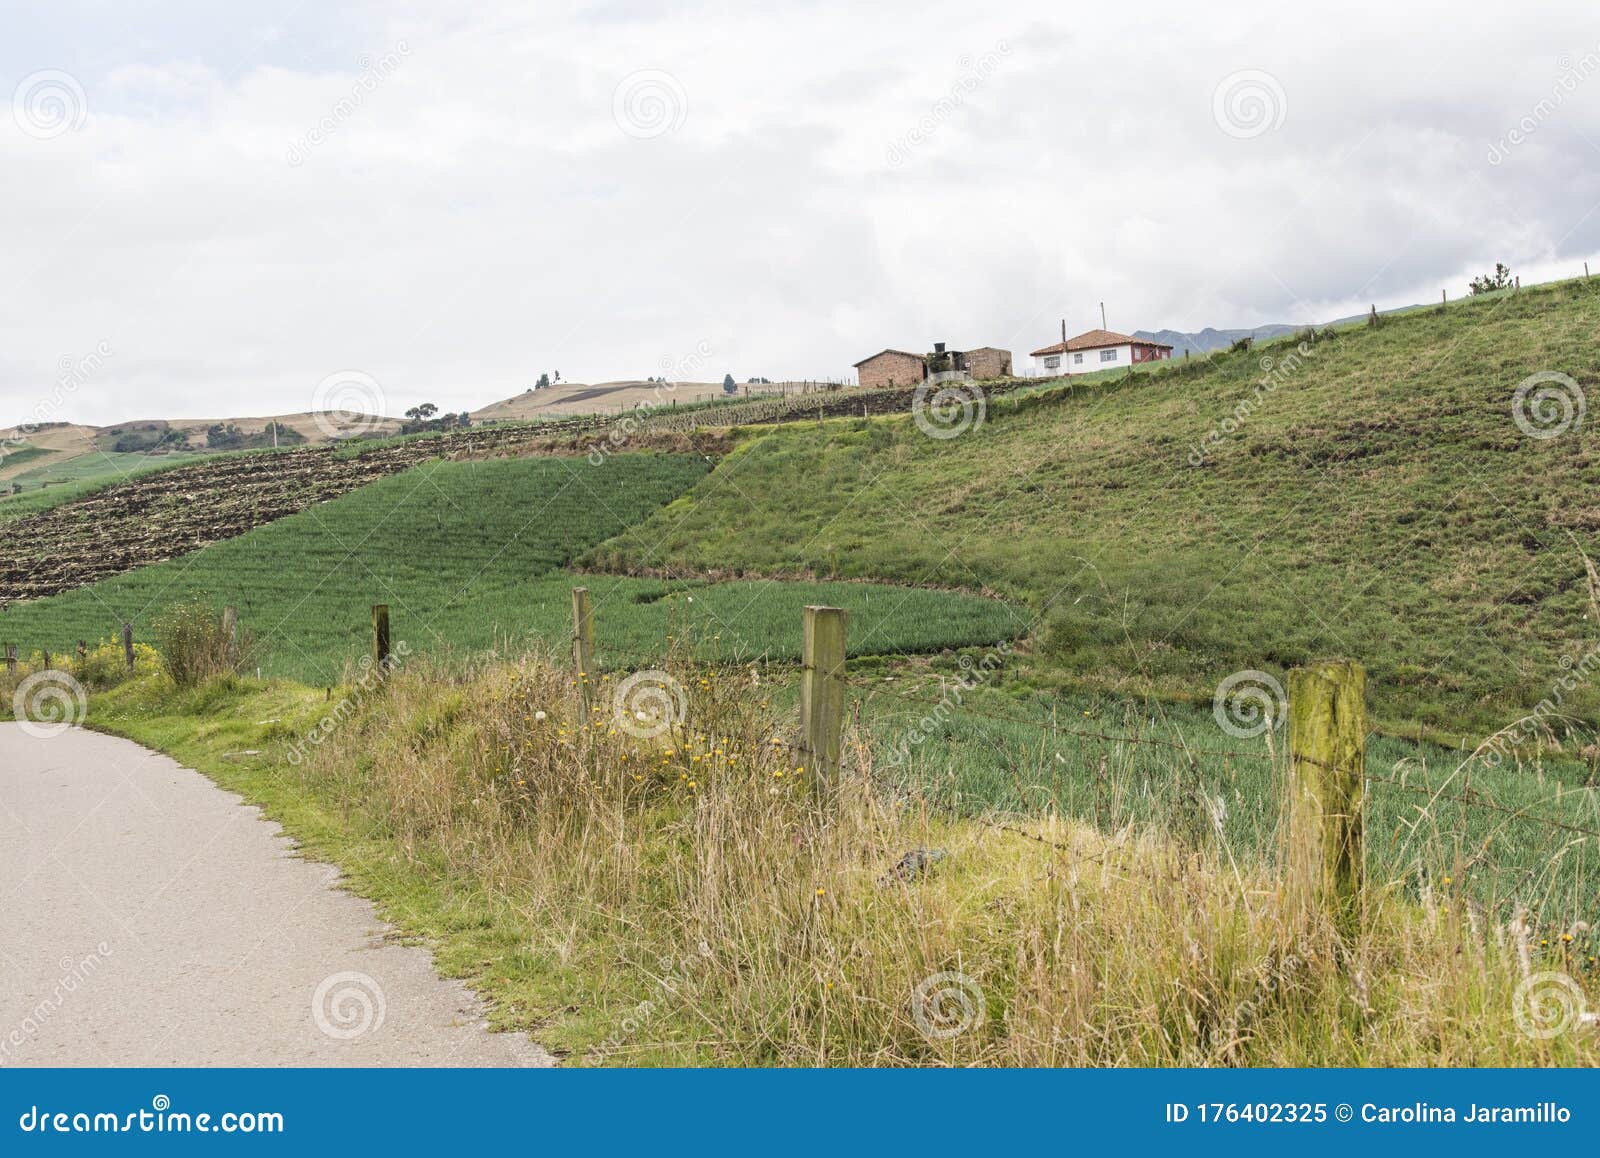 rural andean landscape, rodeside welsh onion fields, allium fistulosum, in aquitania